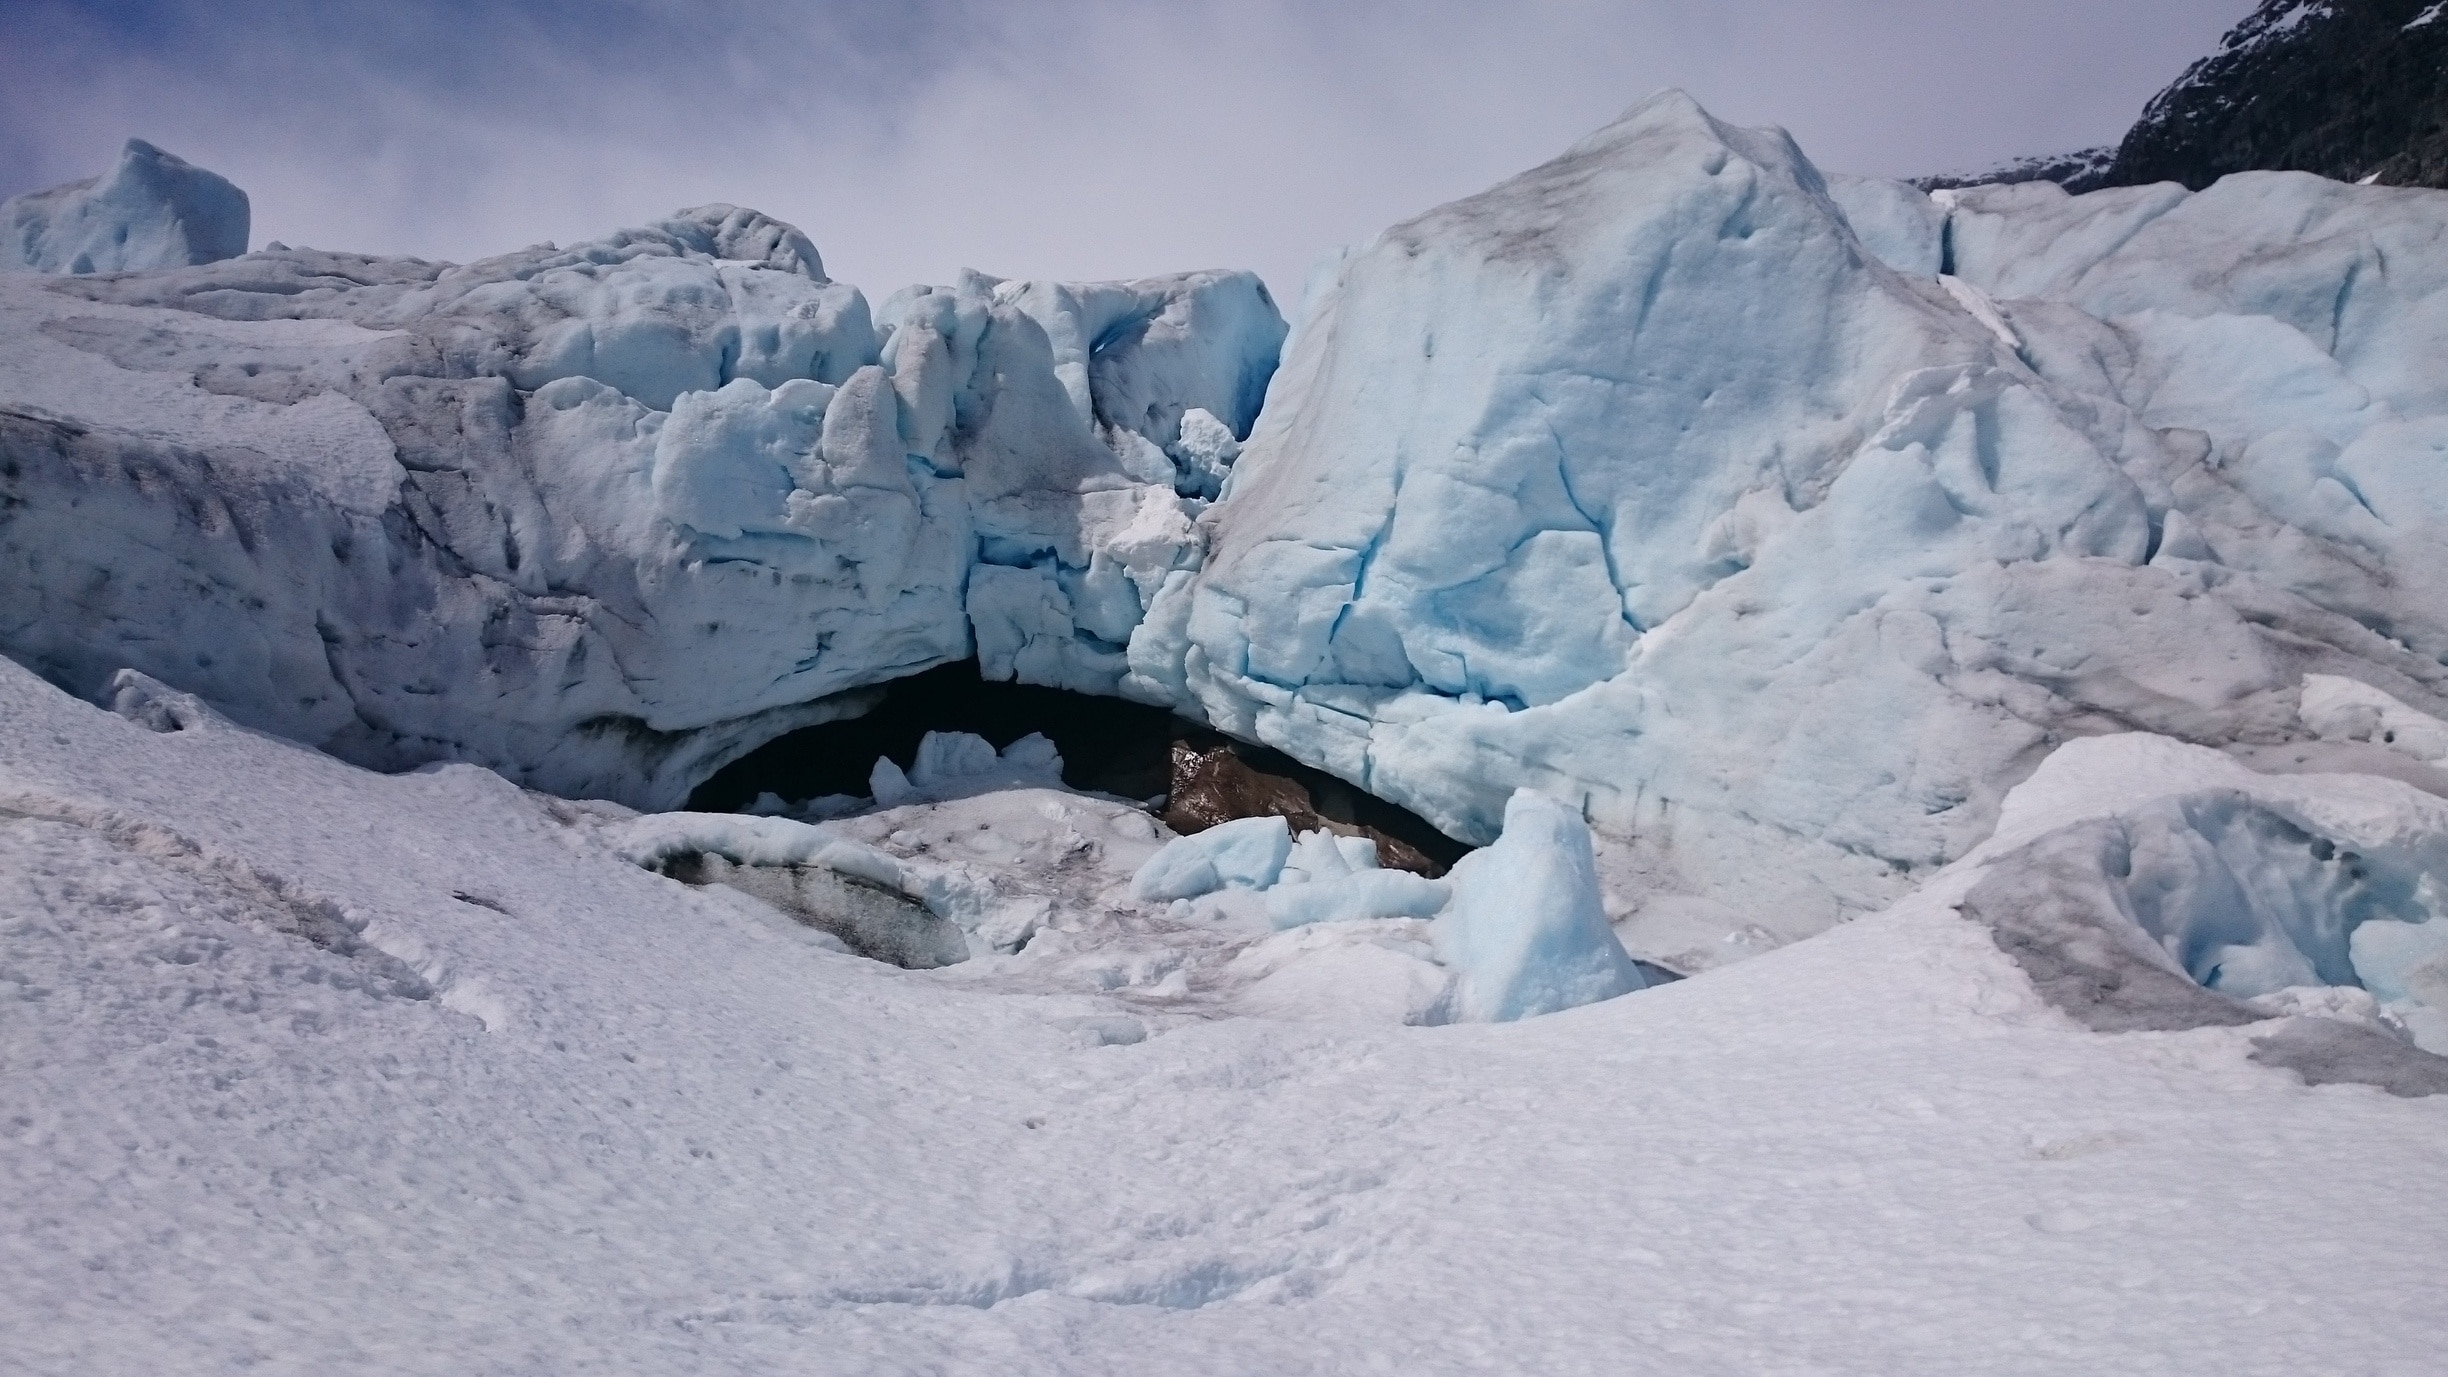 The beautiful Nigardsbreen Glacier reflects the bright blue sky!